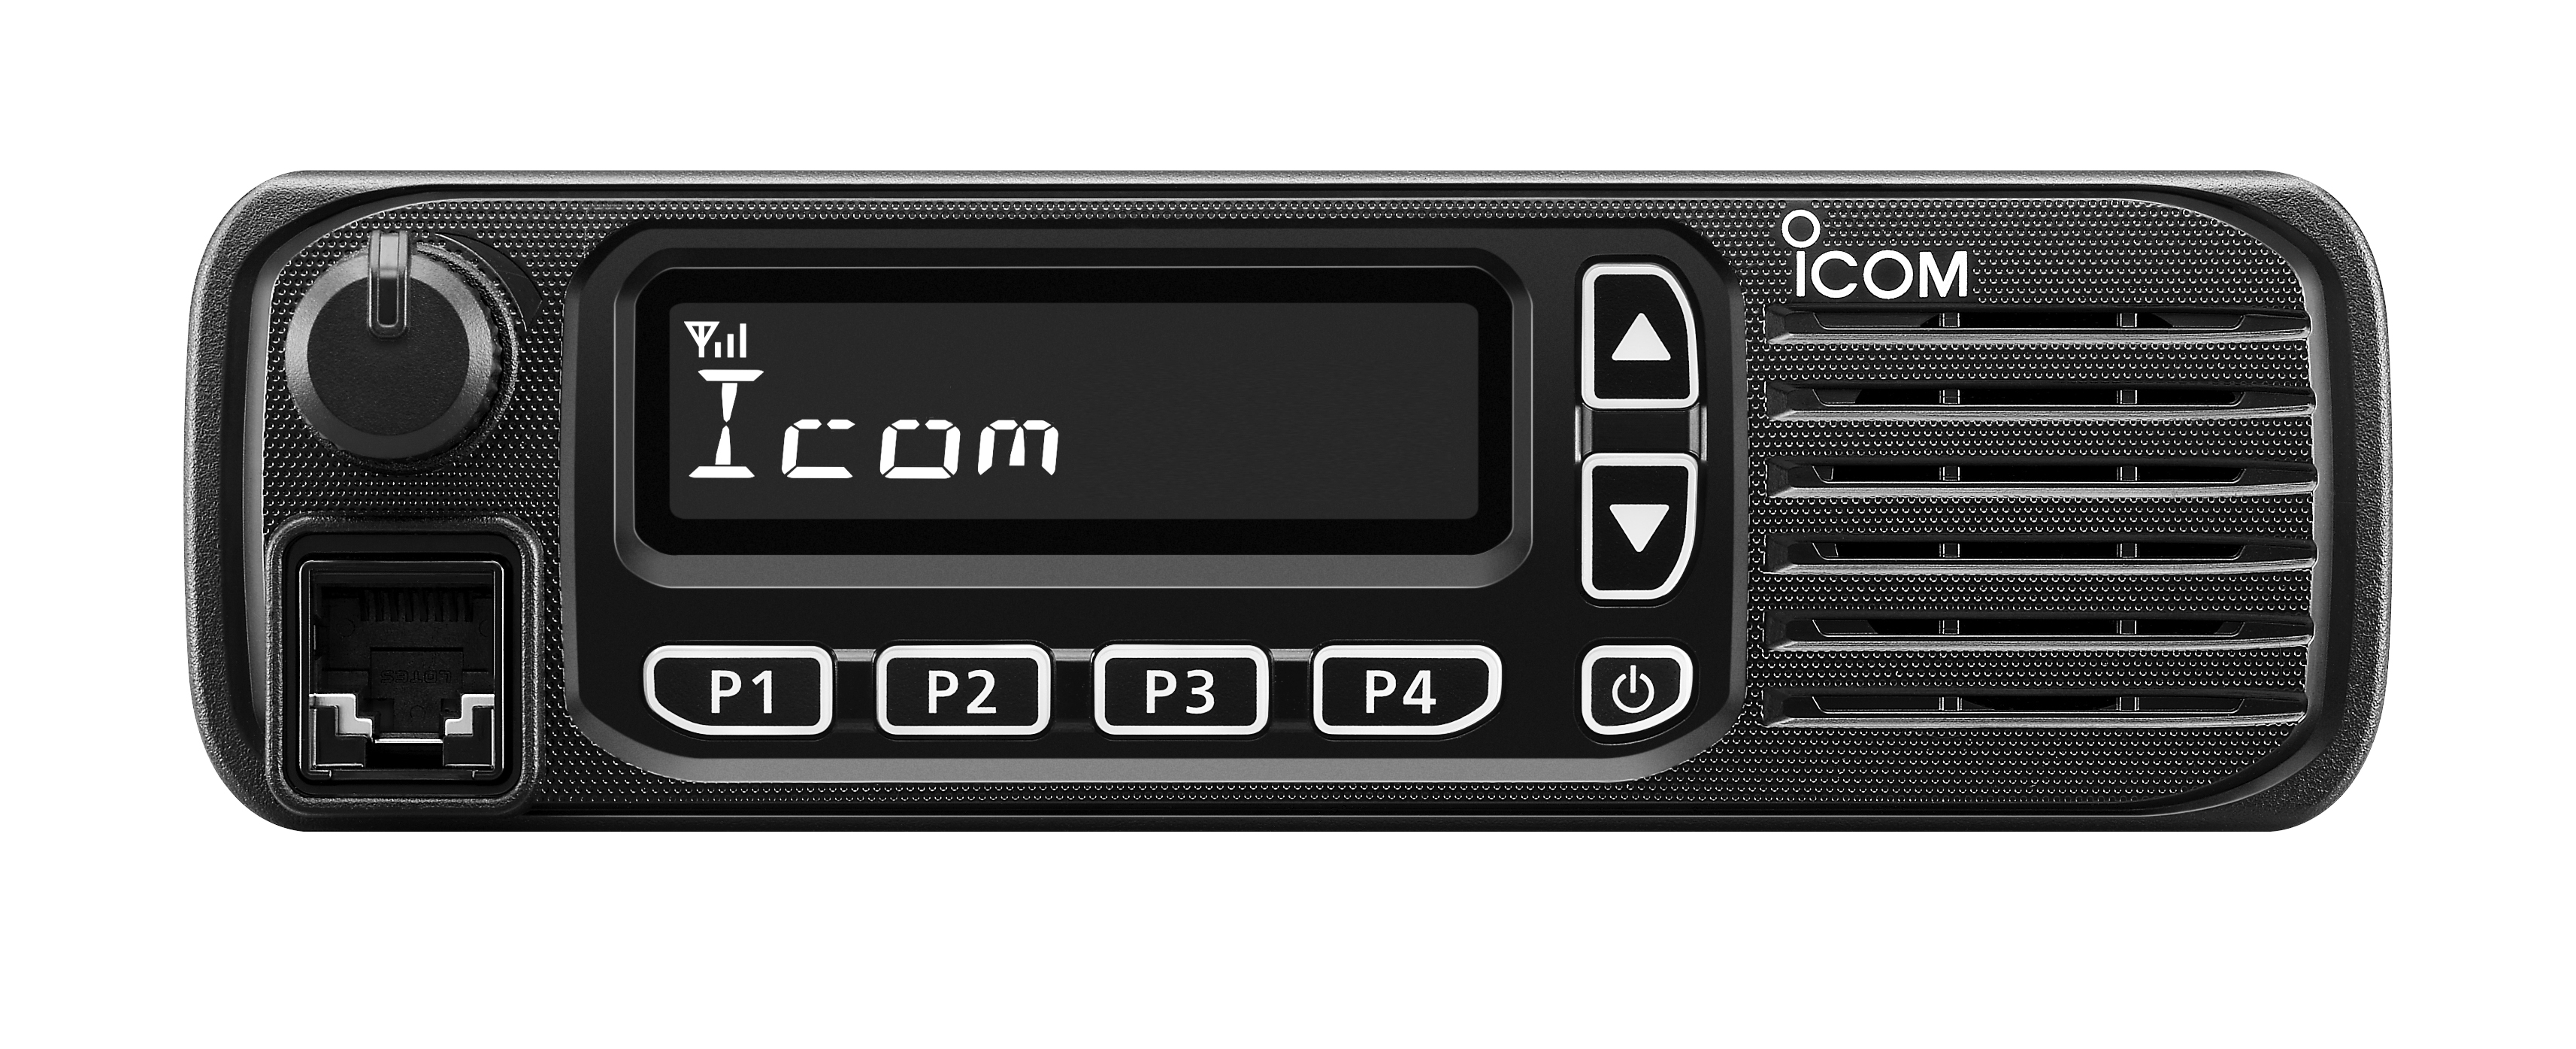 IC-F5130D/F6103D VHF/UHF Digital Mobile Radio Series (Front Image)